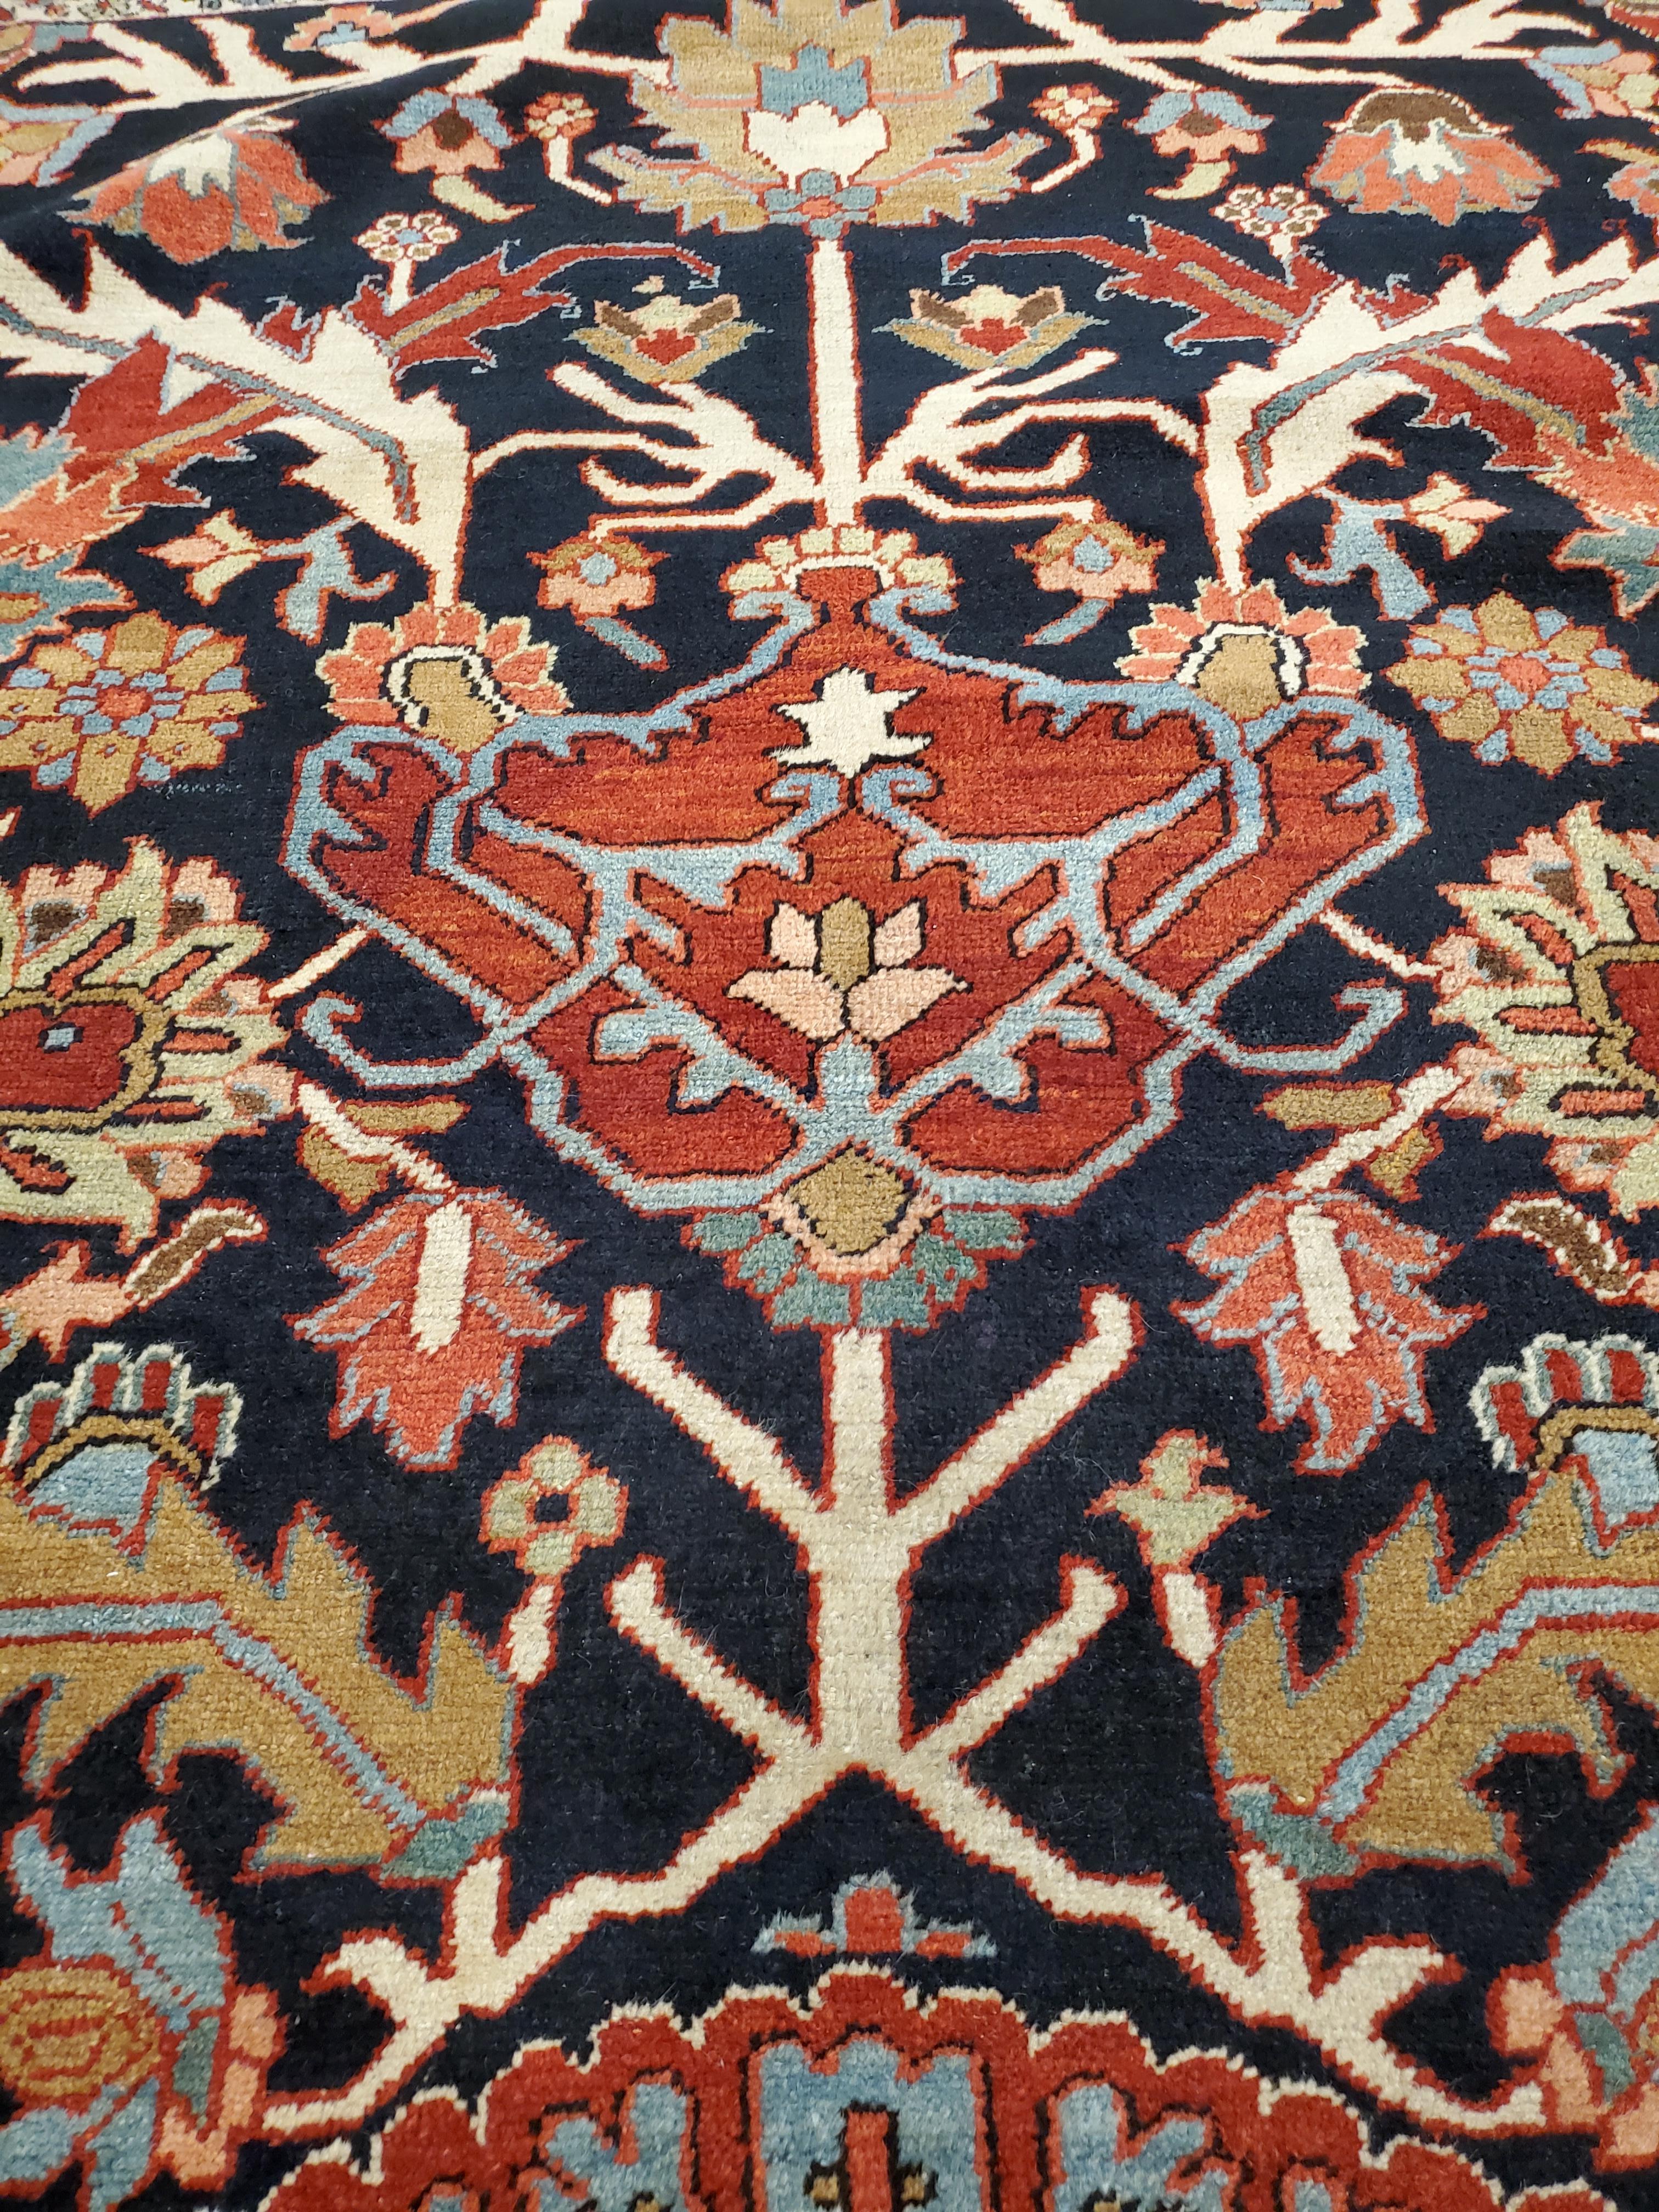 Antique Persian Heriz Carpet Handmade Wool Oriental Rug, Rust, Navy For Sale 1